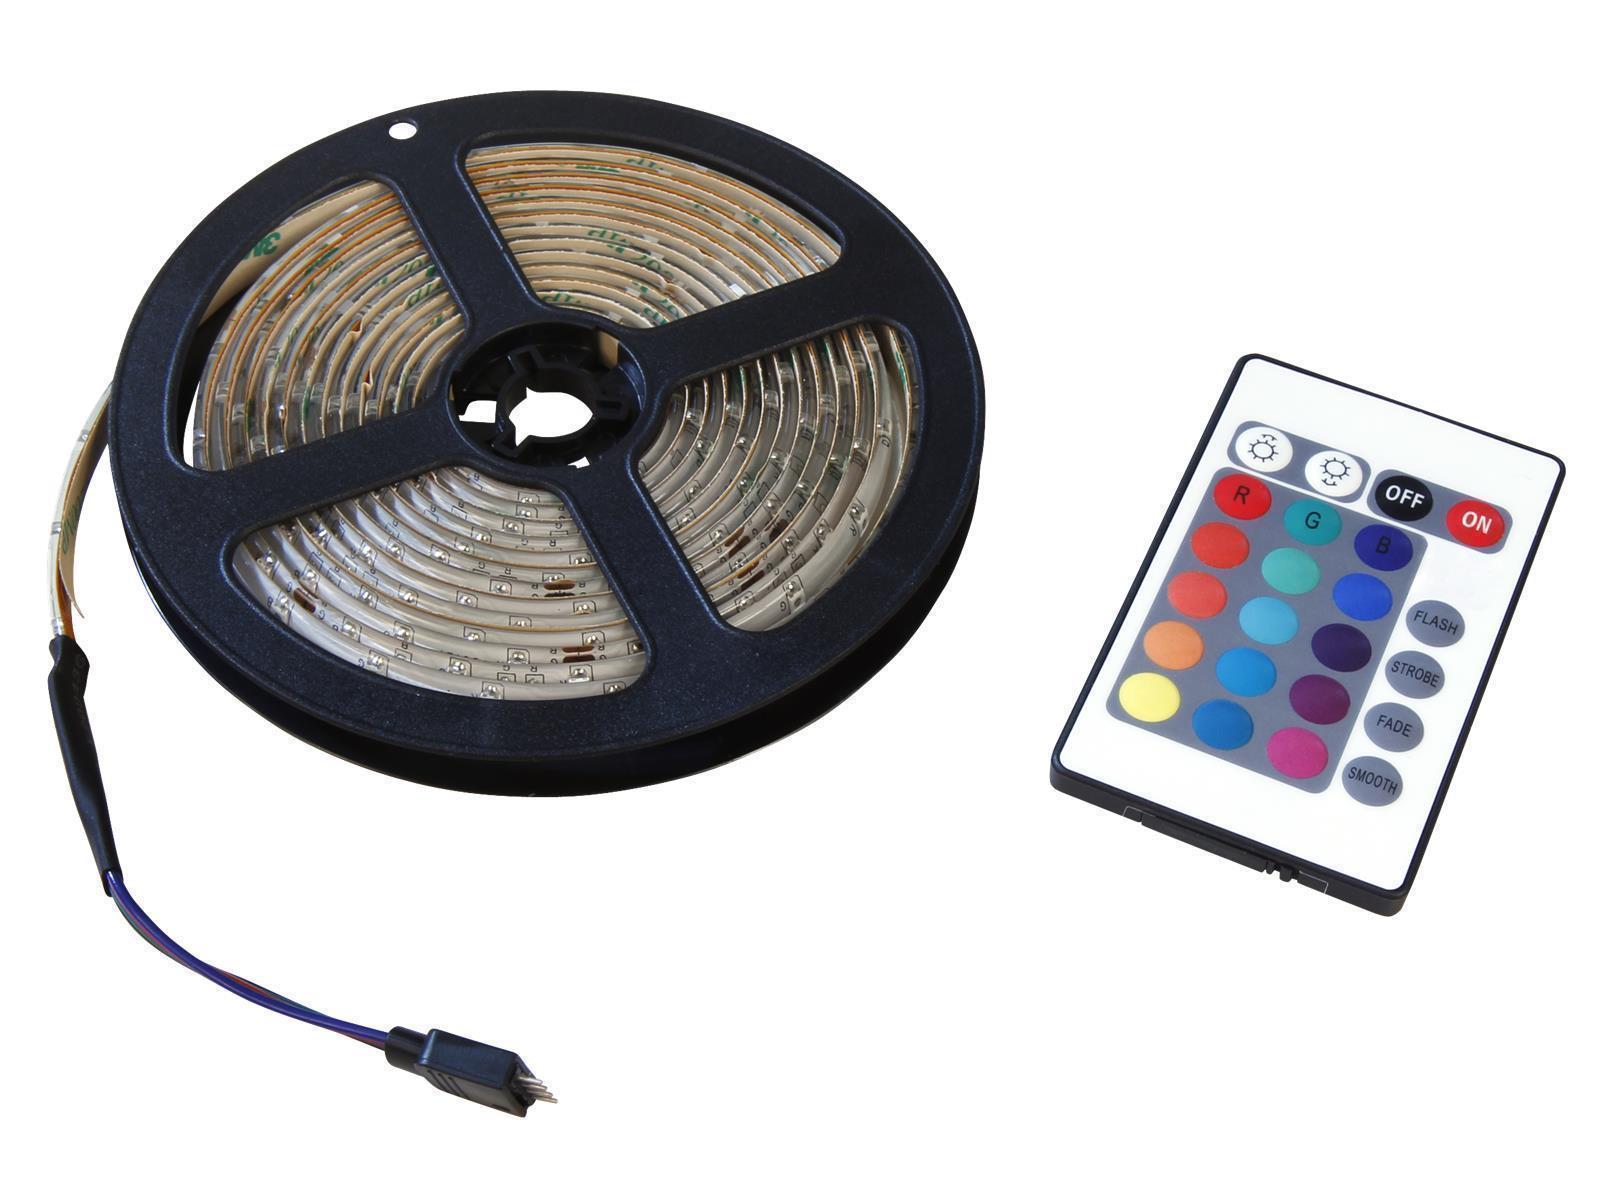 LED-Stripe GRUNDIG, RGB-Komplettset, 180 SMD LEDs, 3m